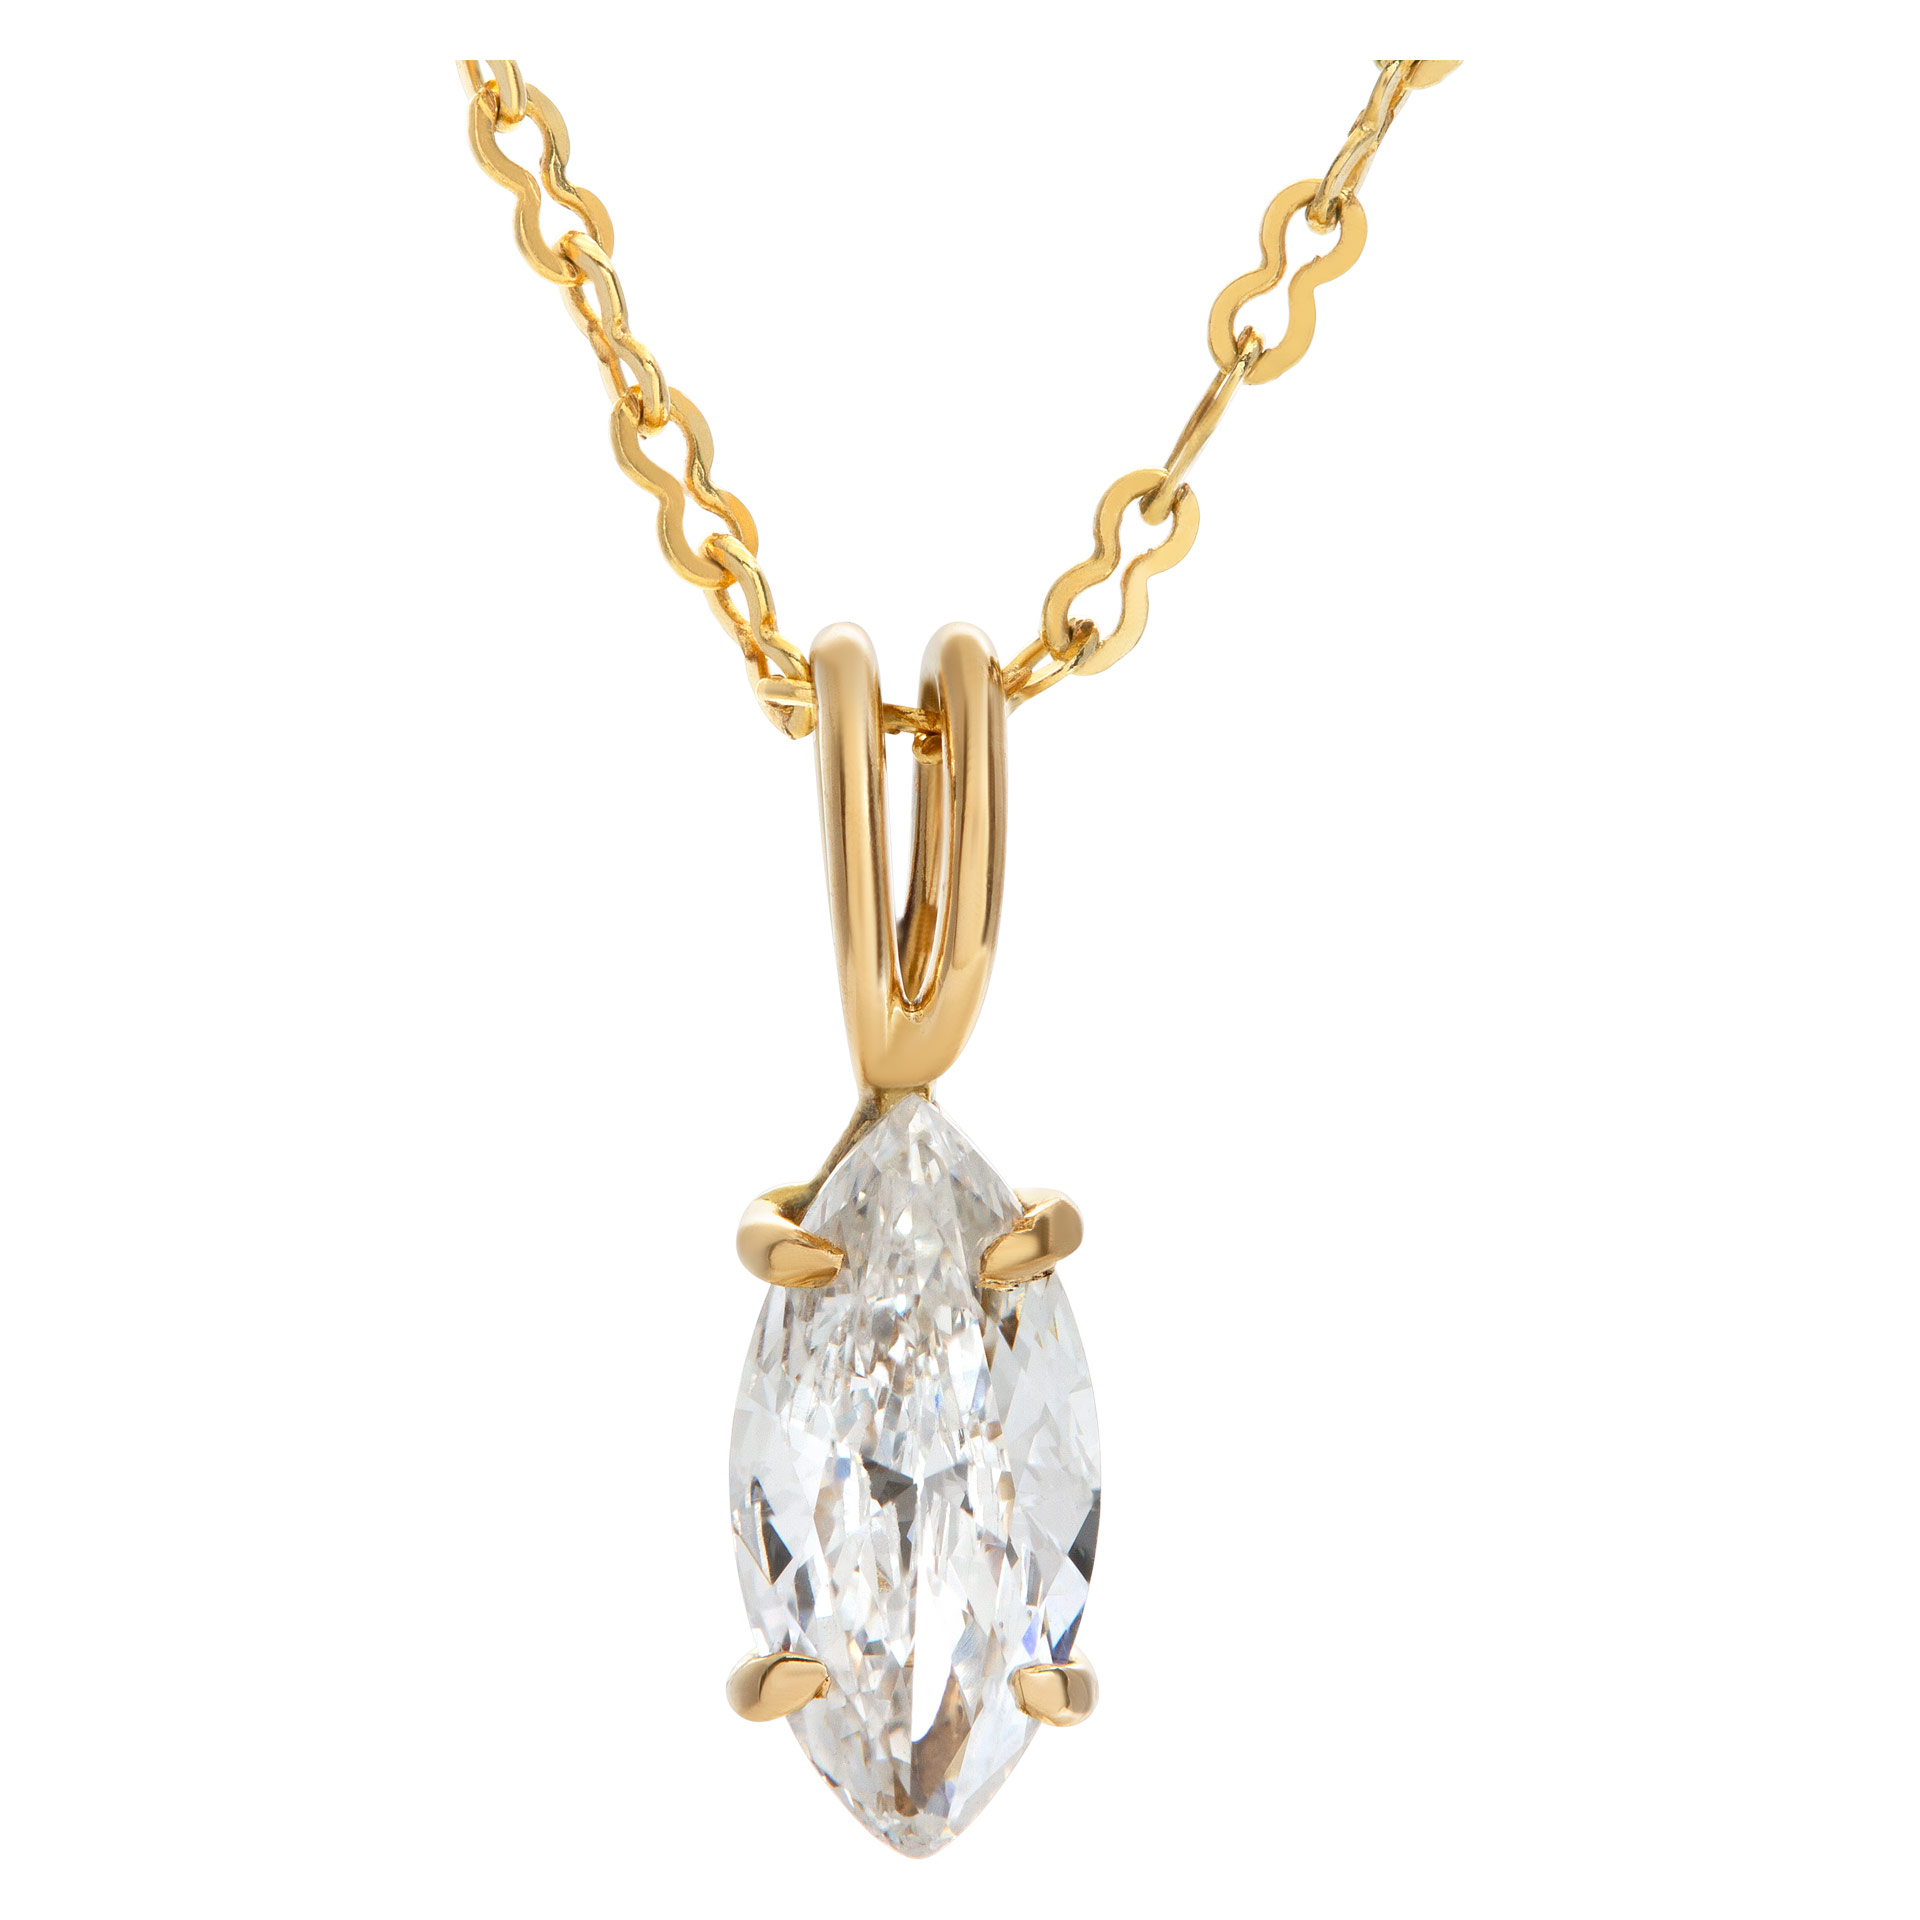 GIA certified marquise brilliant cut diamond 0.73 carat (E color, SI1 clarity) necklace (Stones)